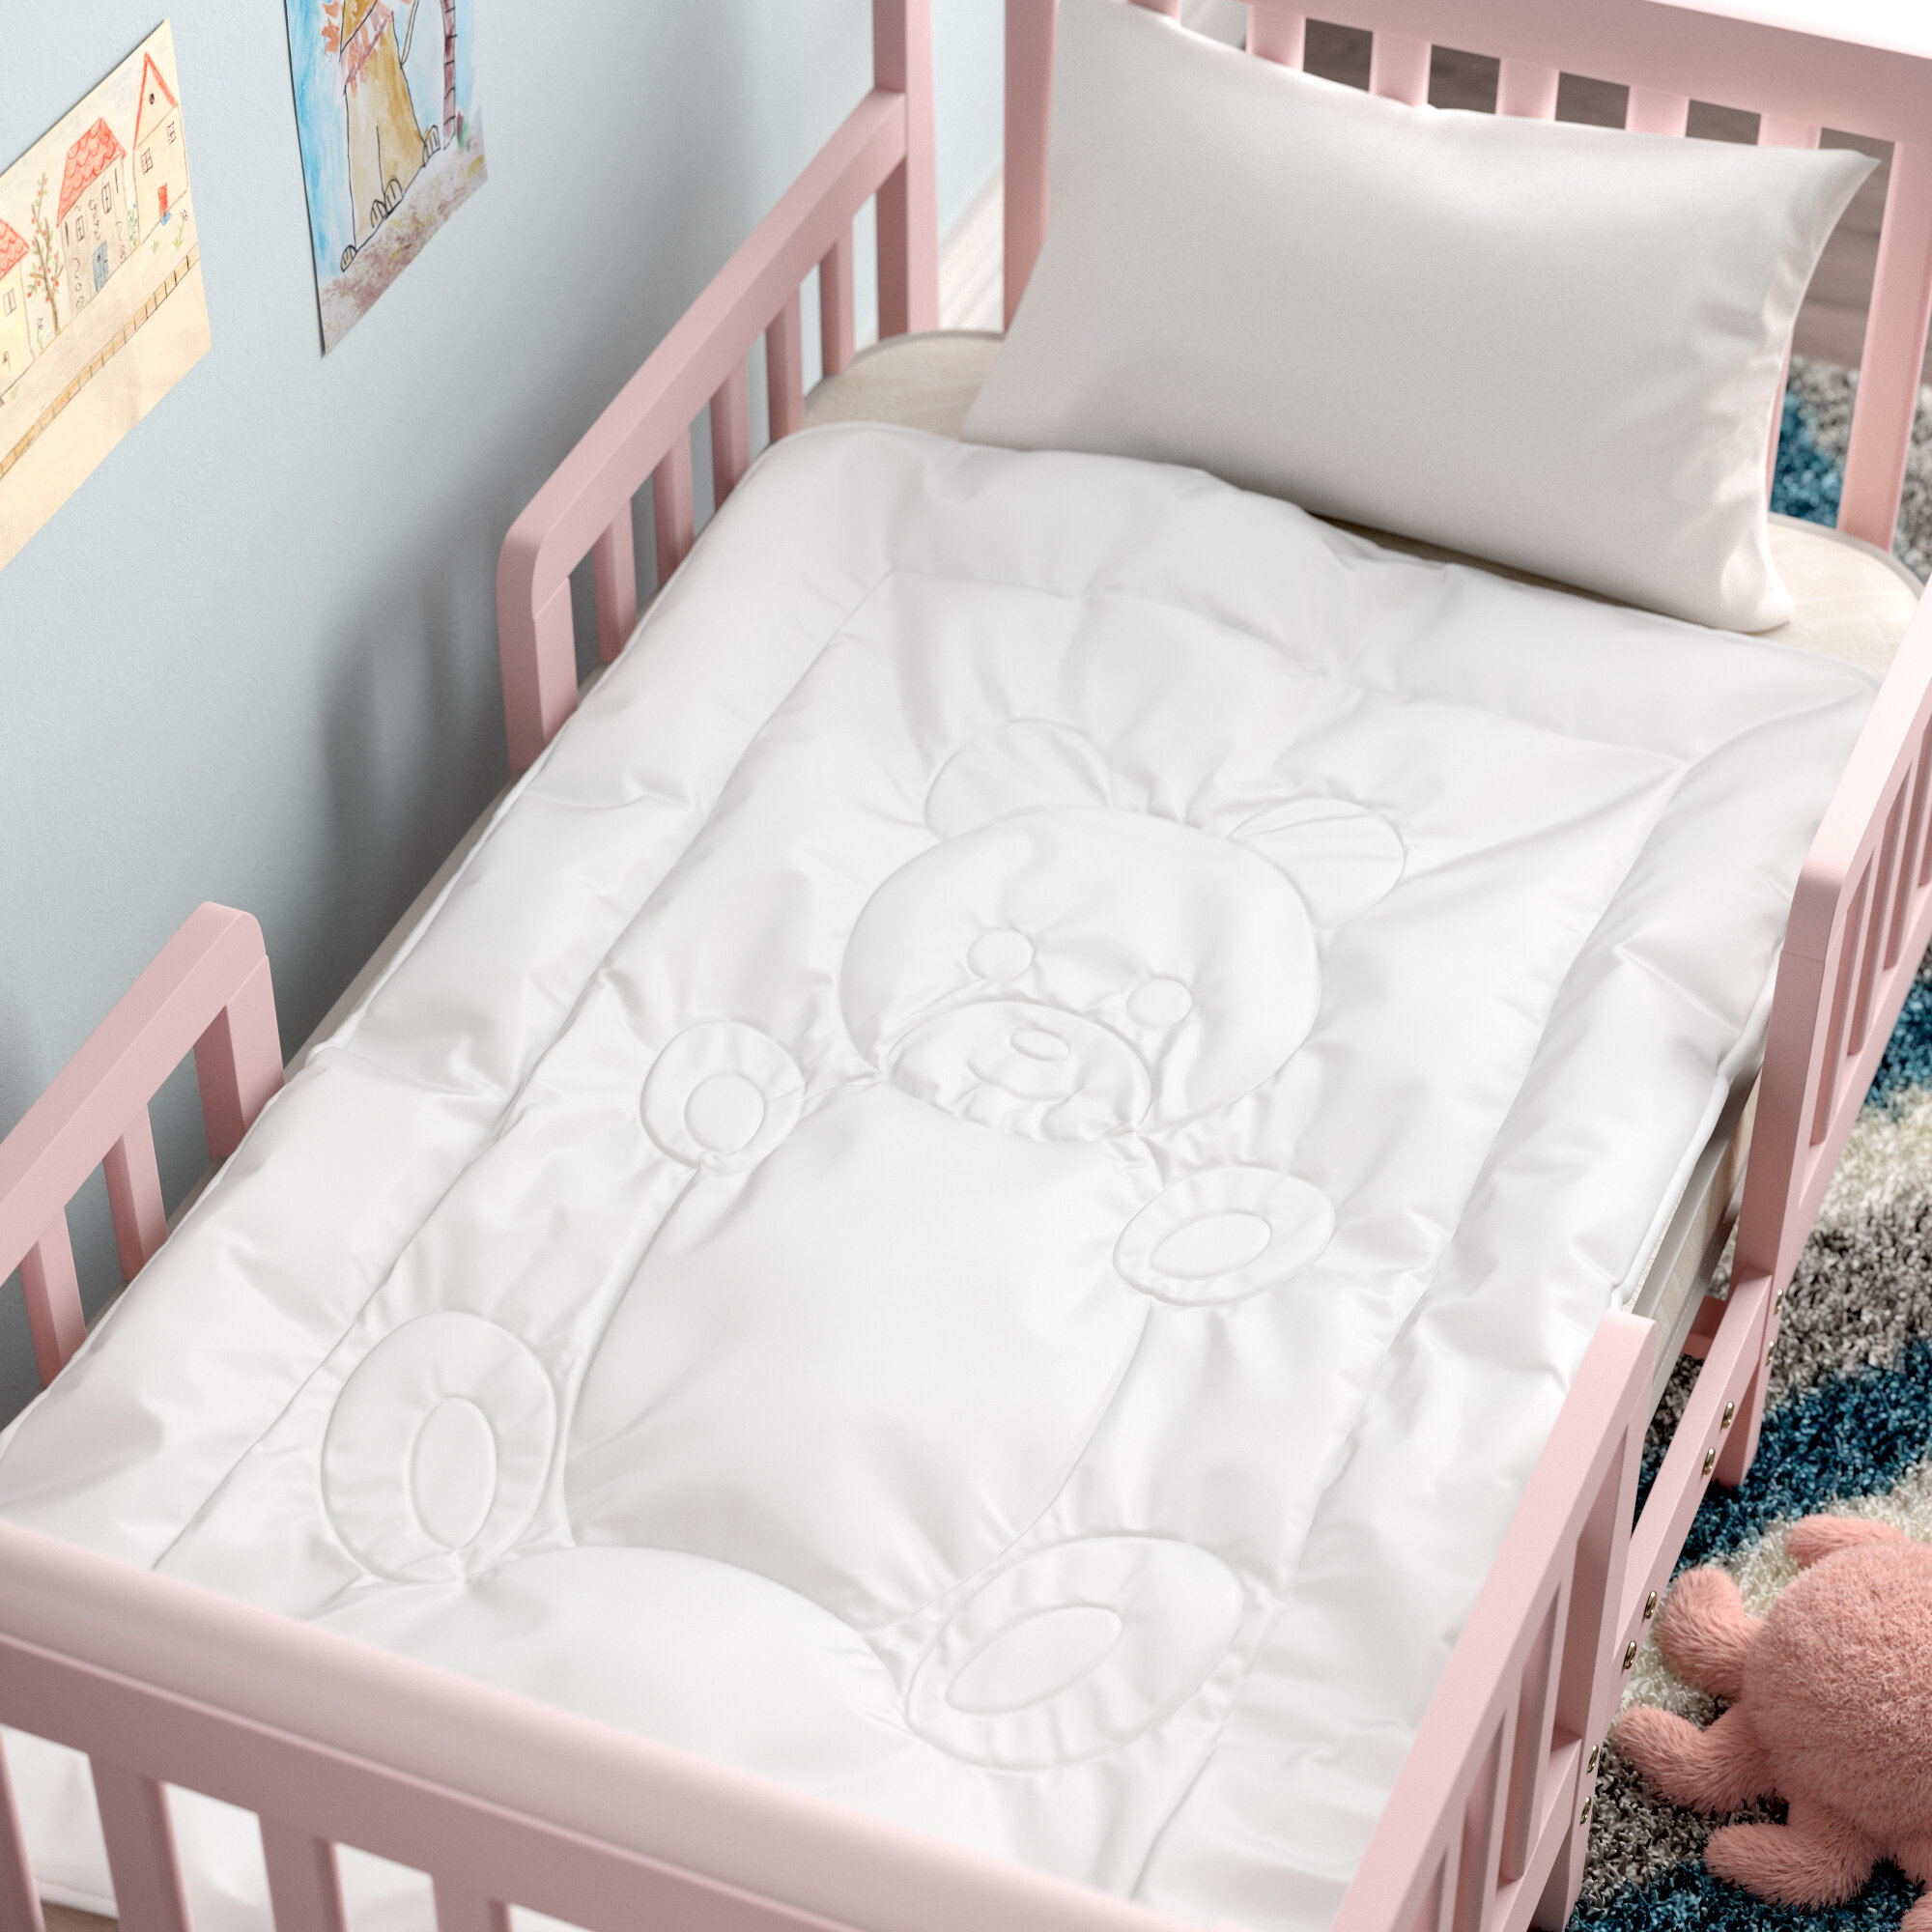 Harriet Bee Guildford Teddy Bear Toddler Comforter Reviews Wayfair